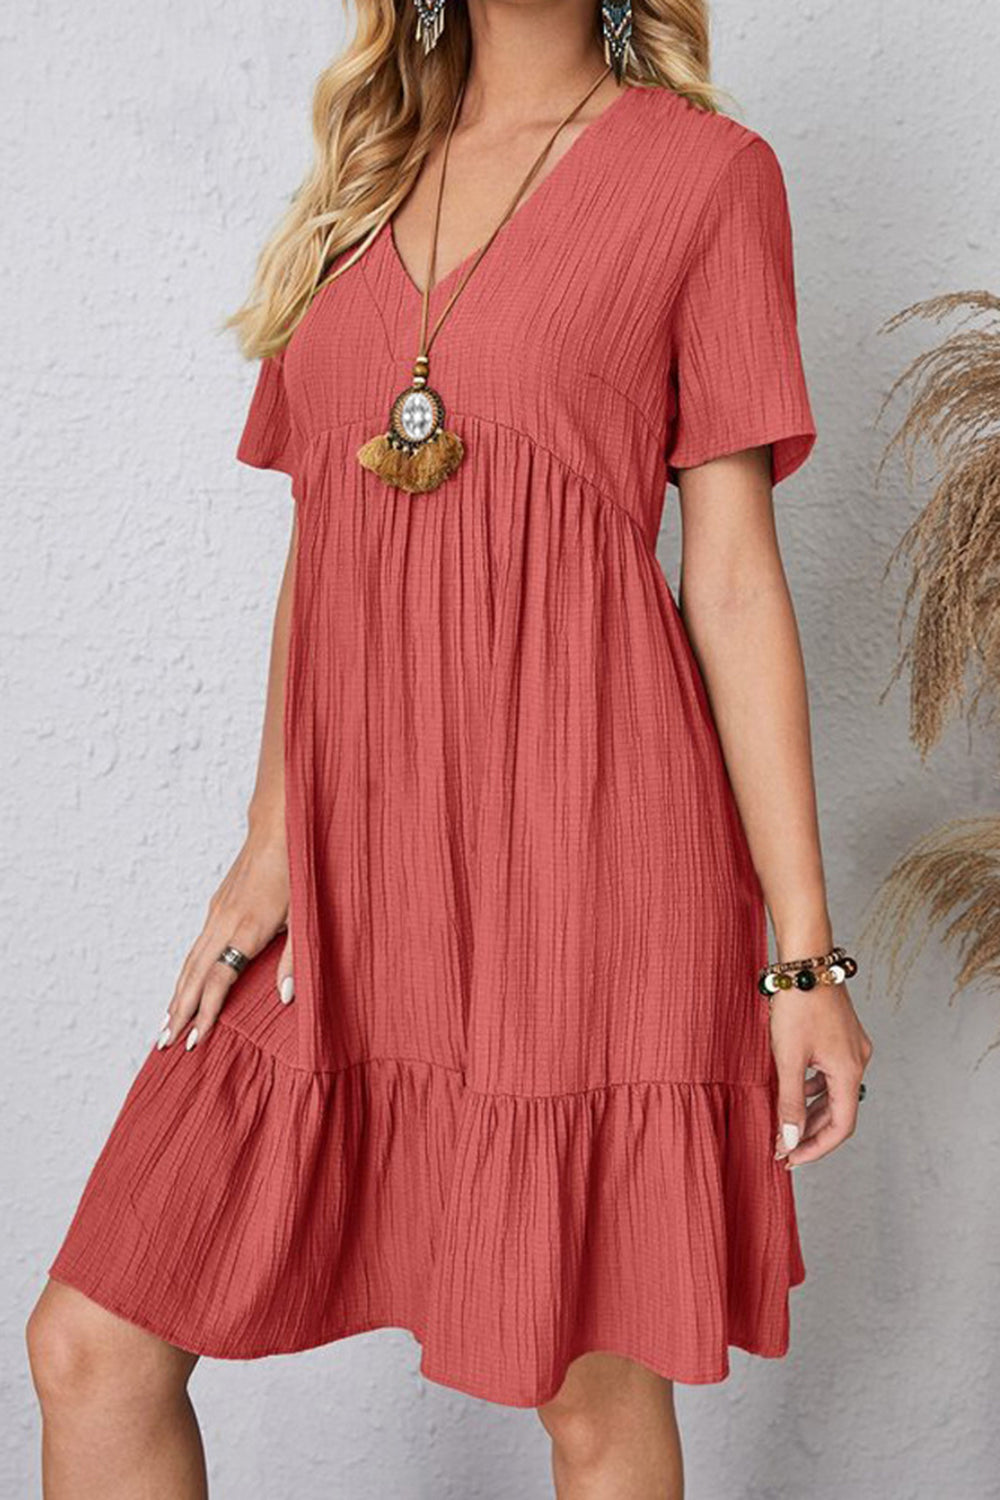 Full Size Ruched V-Neck Short Sleeve Dress (7 Colors) Dress Krazy Heart Designs Boutique Coral S 